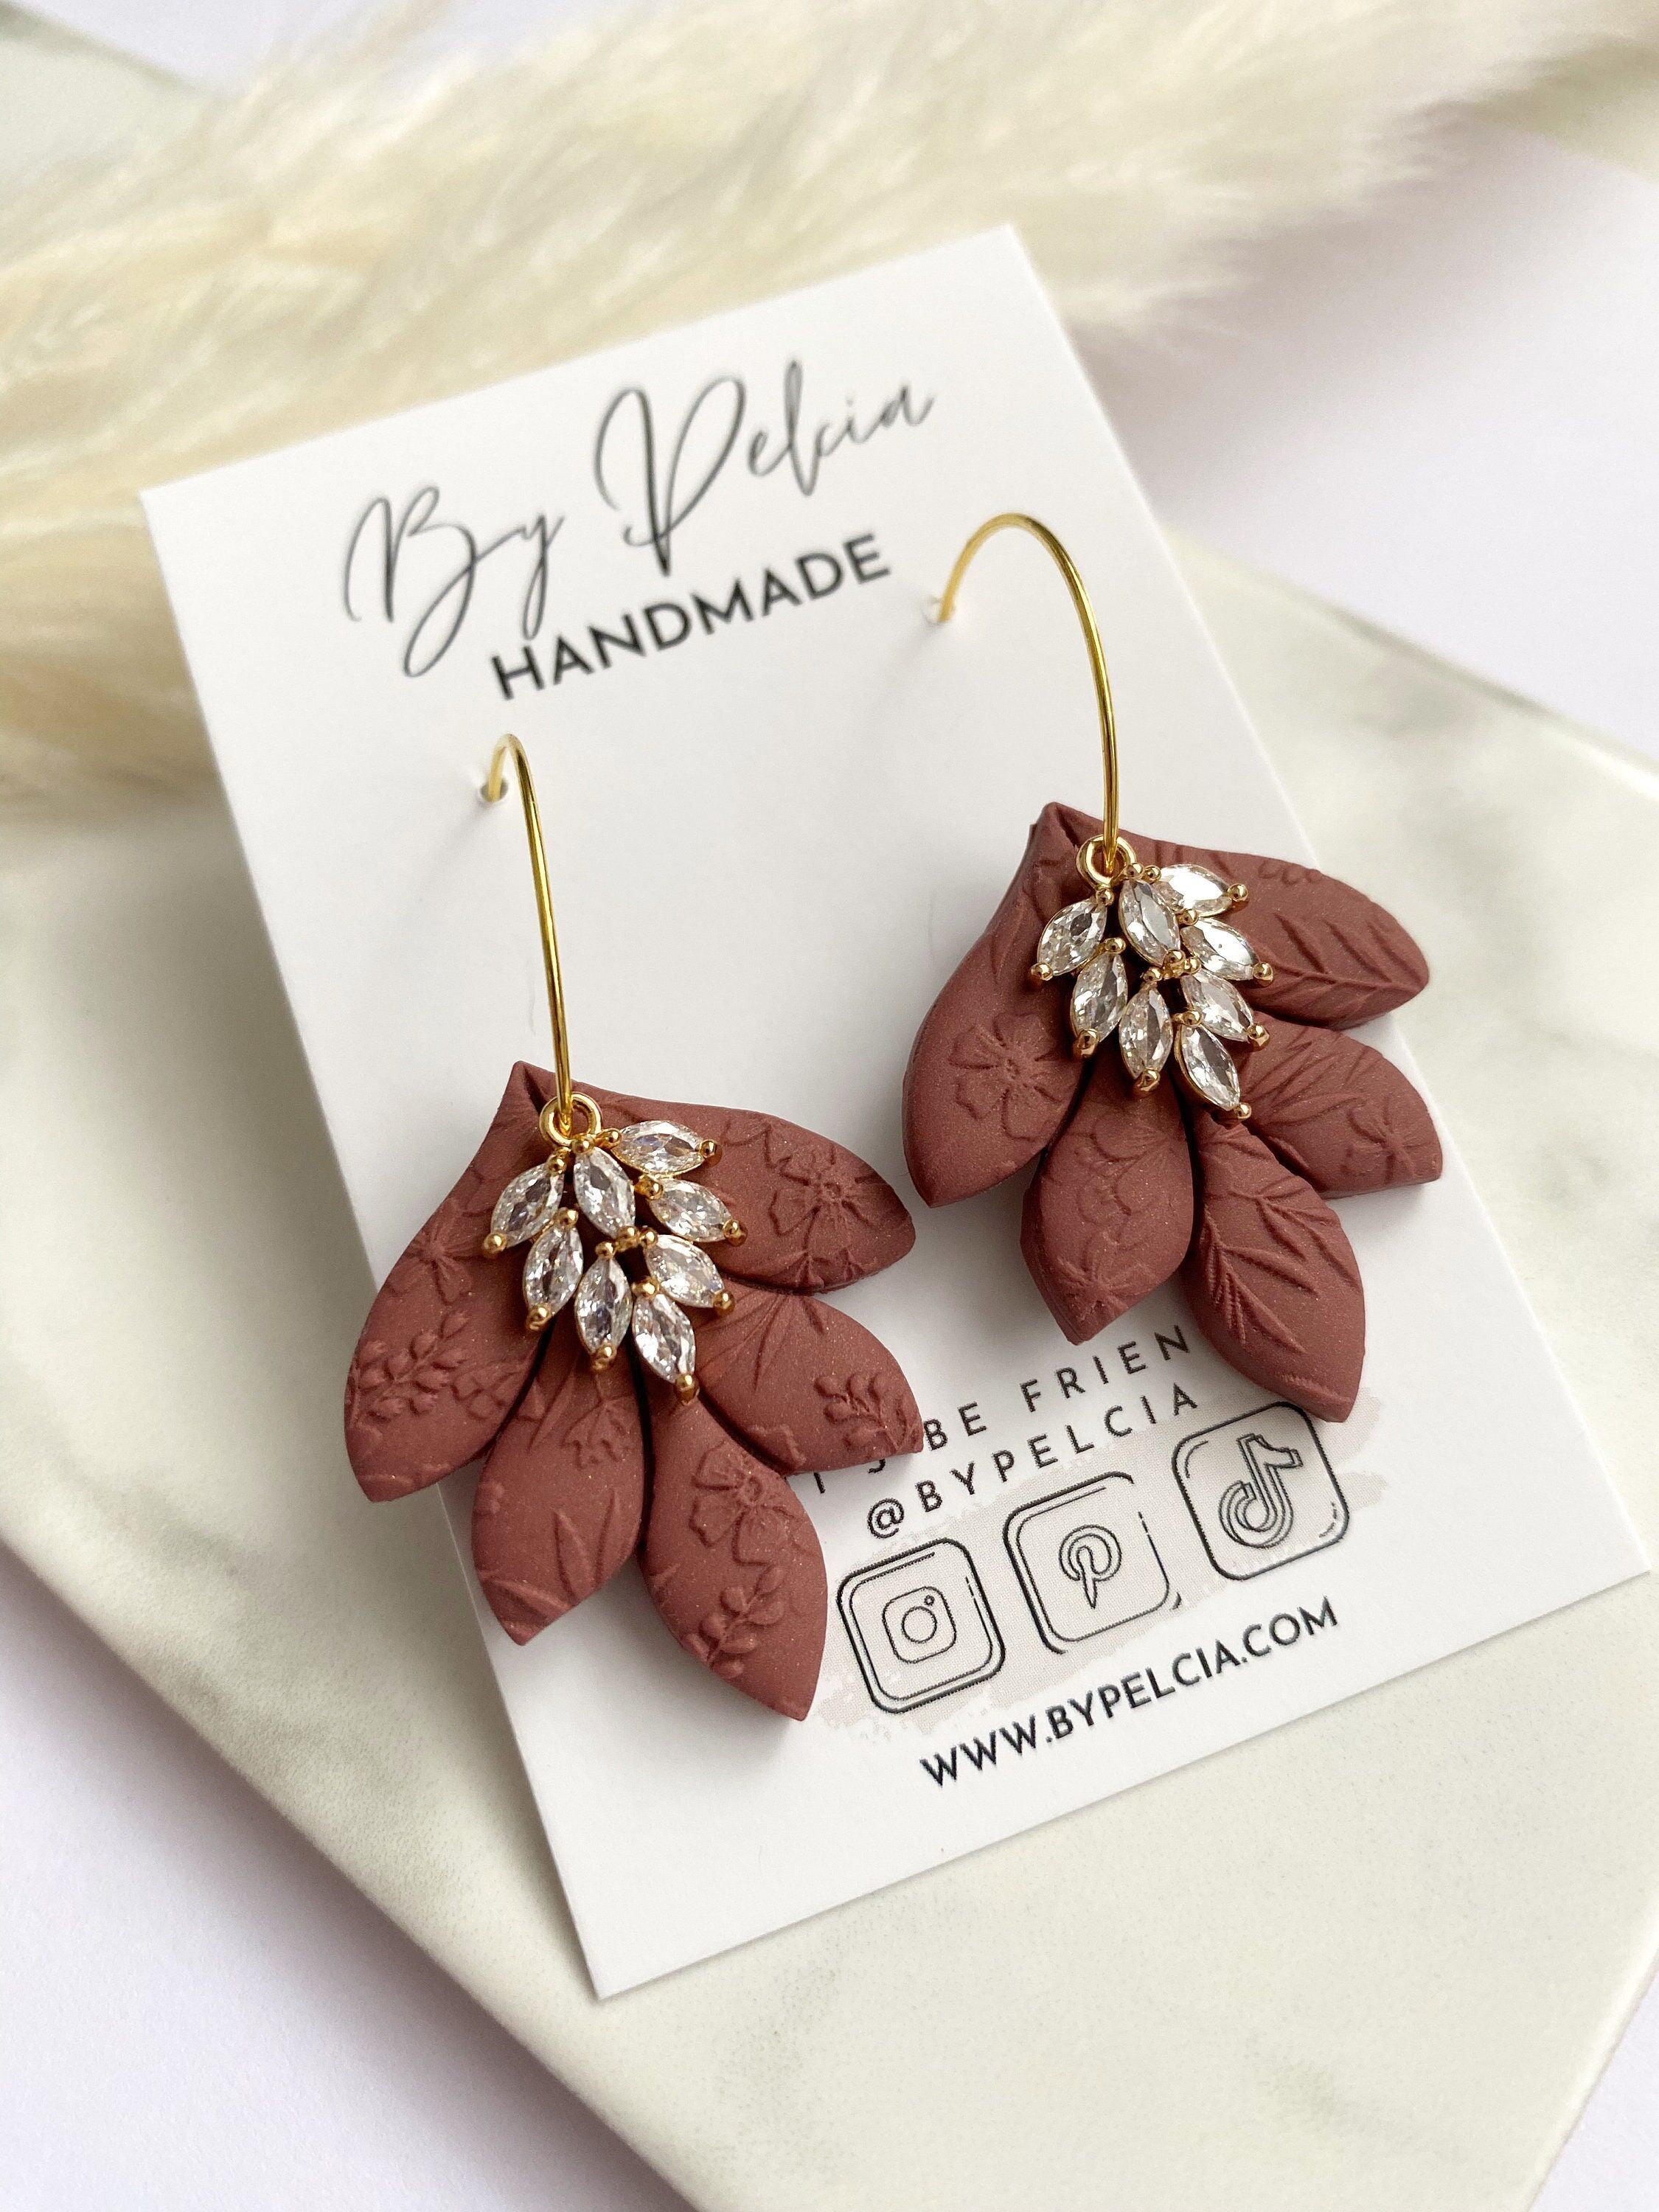 Wholesale Arrow Design Hanging Metal Earrings in Bulk - Handmade  Copperish-Brown Drop Earrings with Check Pattern from Wholesalers in India